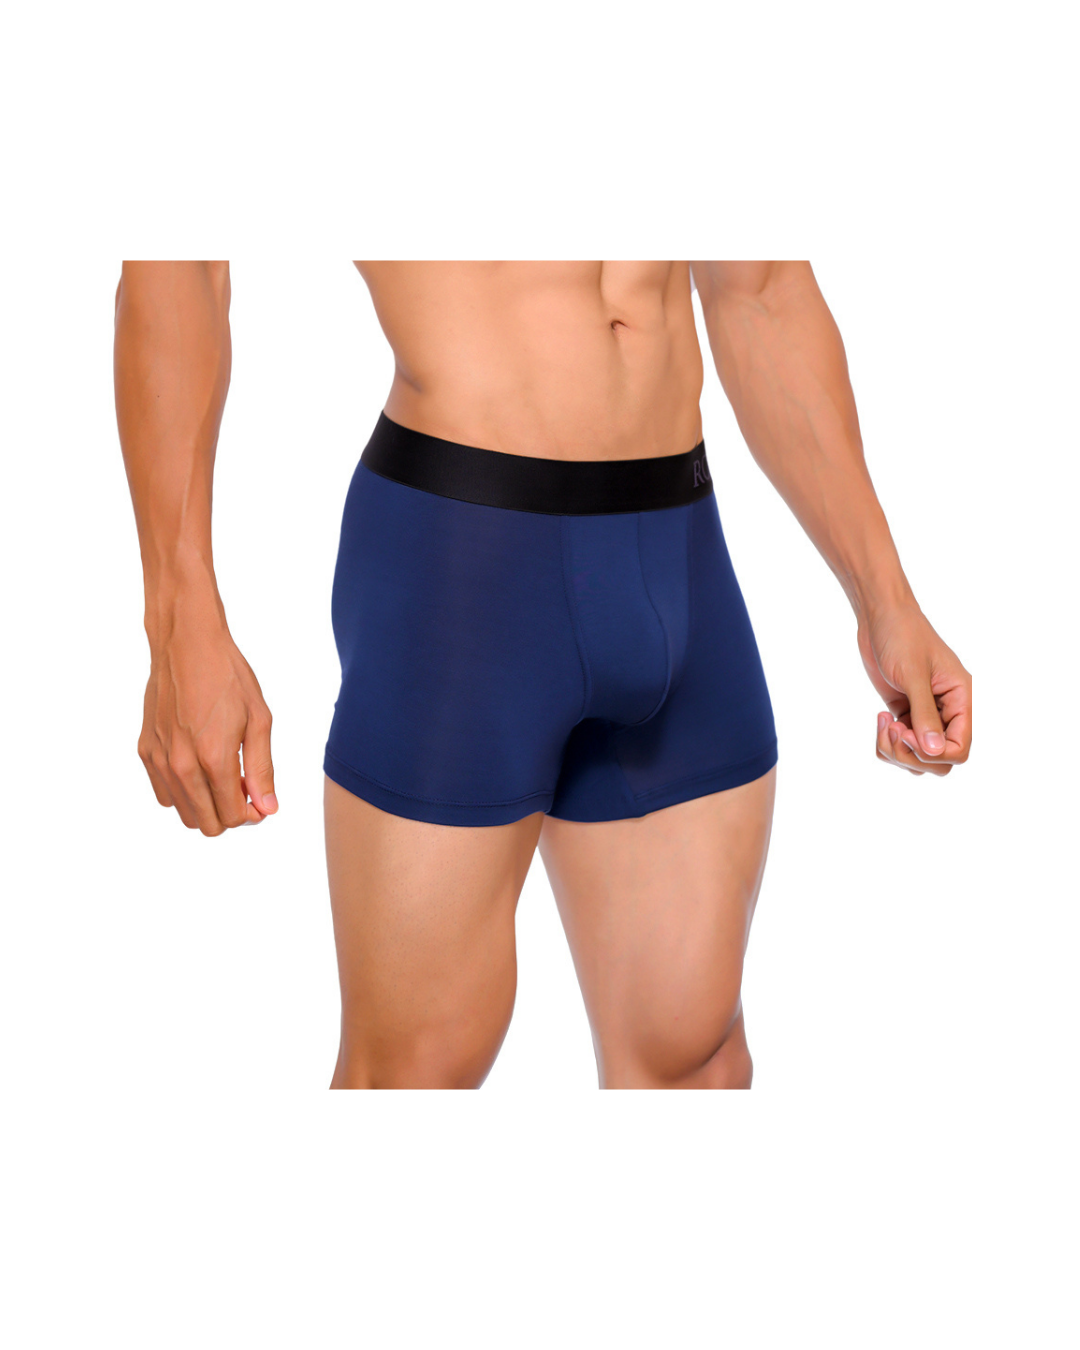 Men Underwear - TRUNKS - 2 Pack (Blue & Blue)